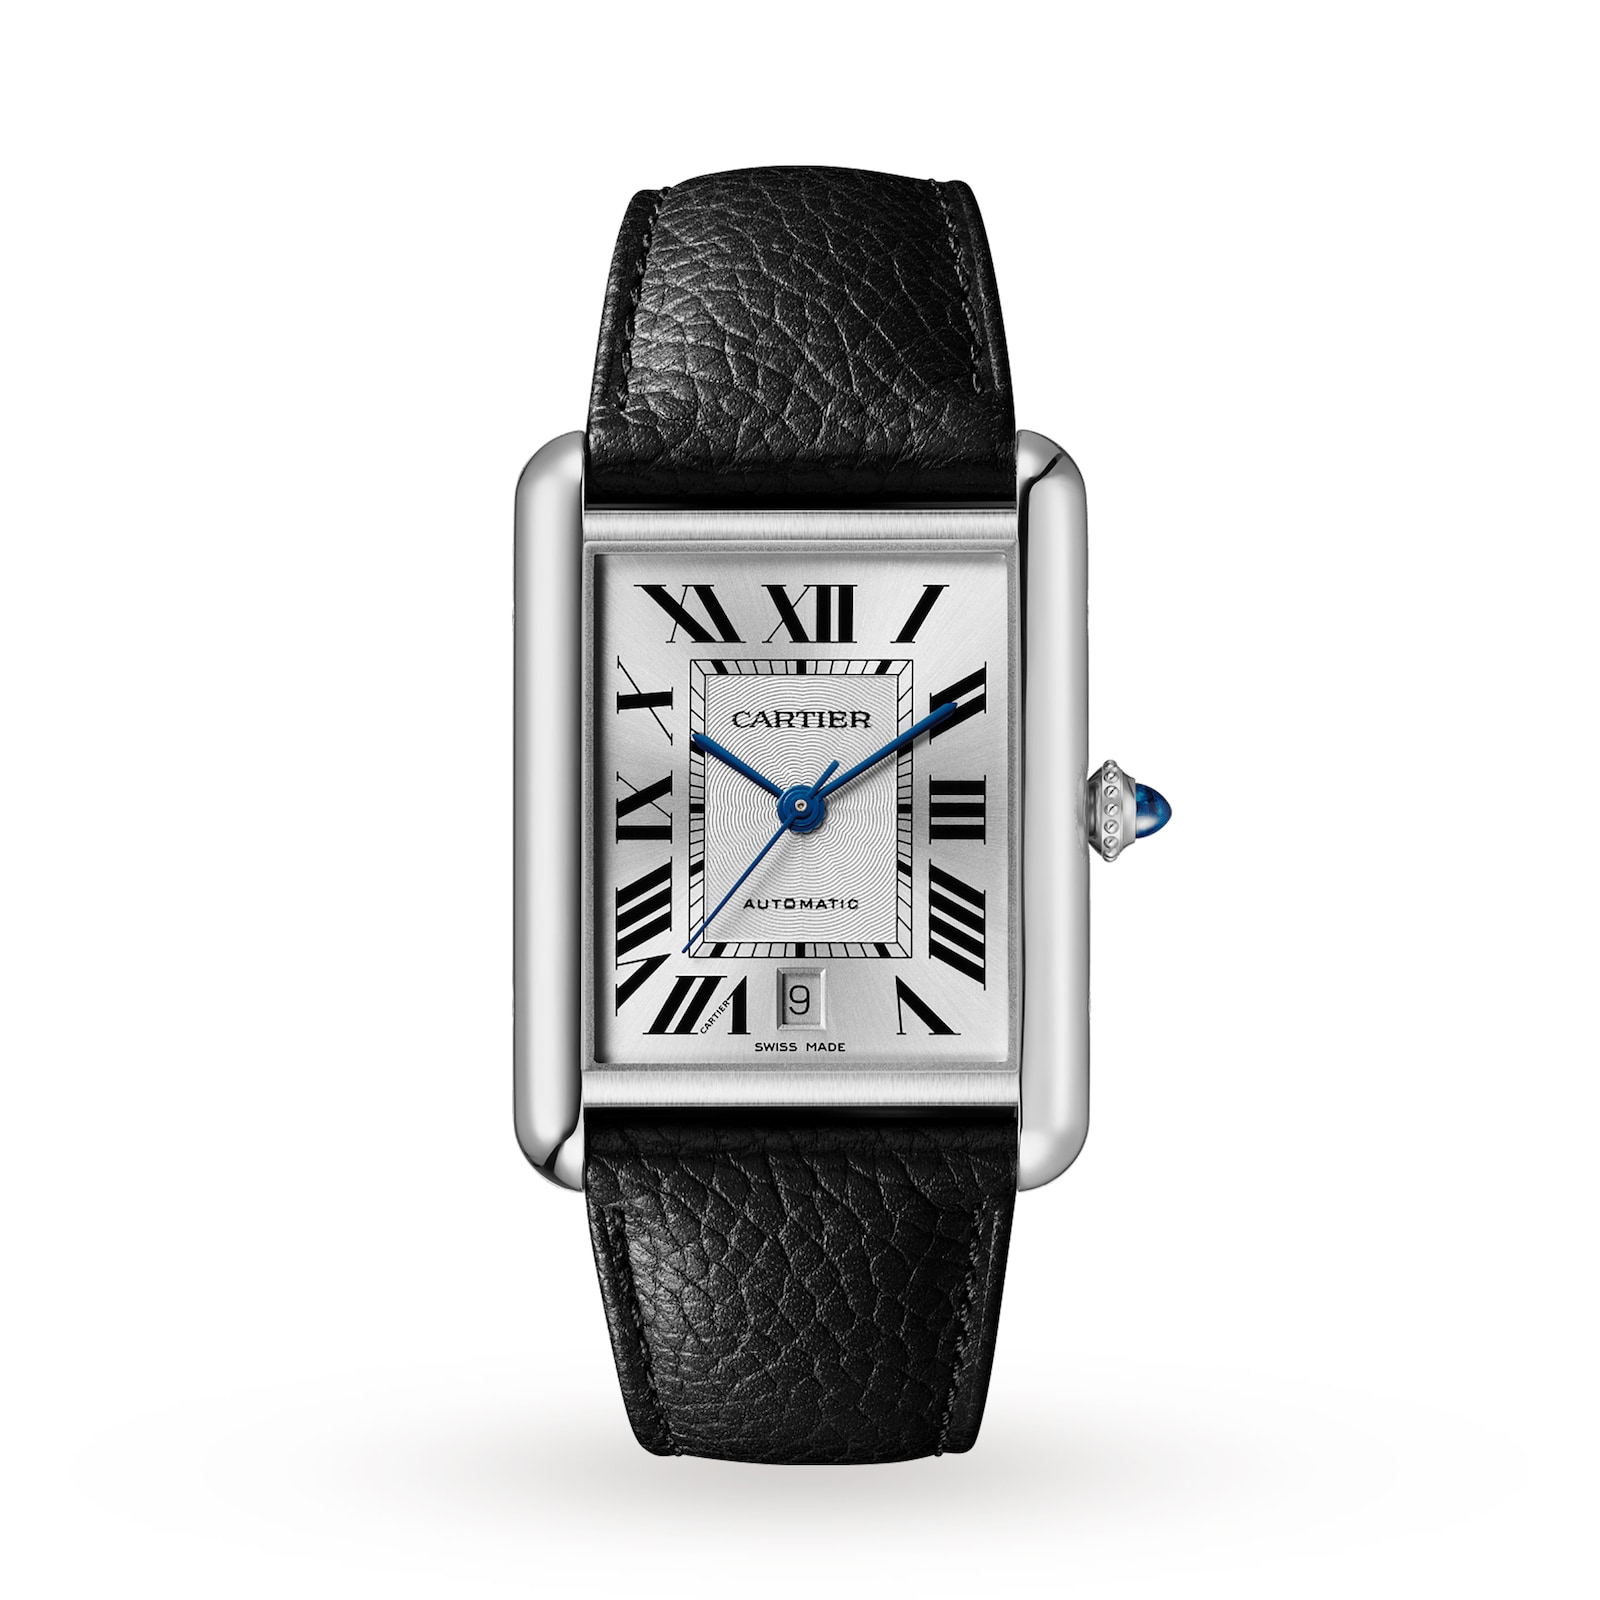 Best Luxury Watch under 5k - Cartier Tank Must. Credit: Cartier